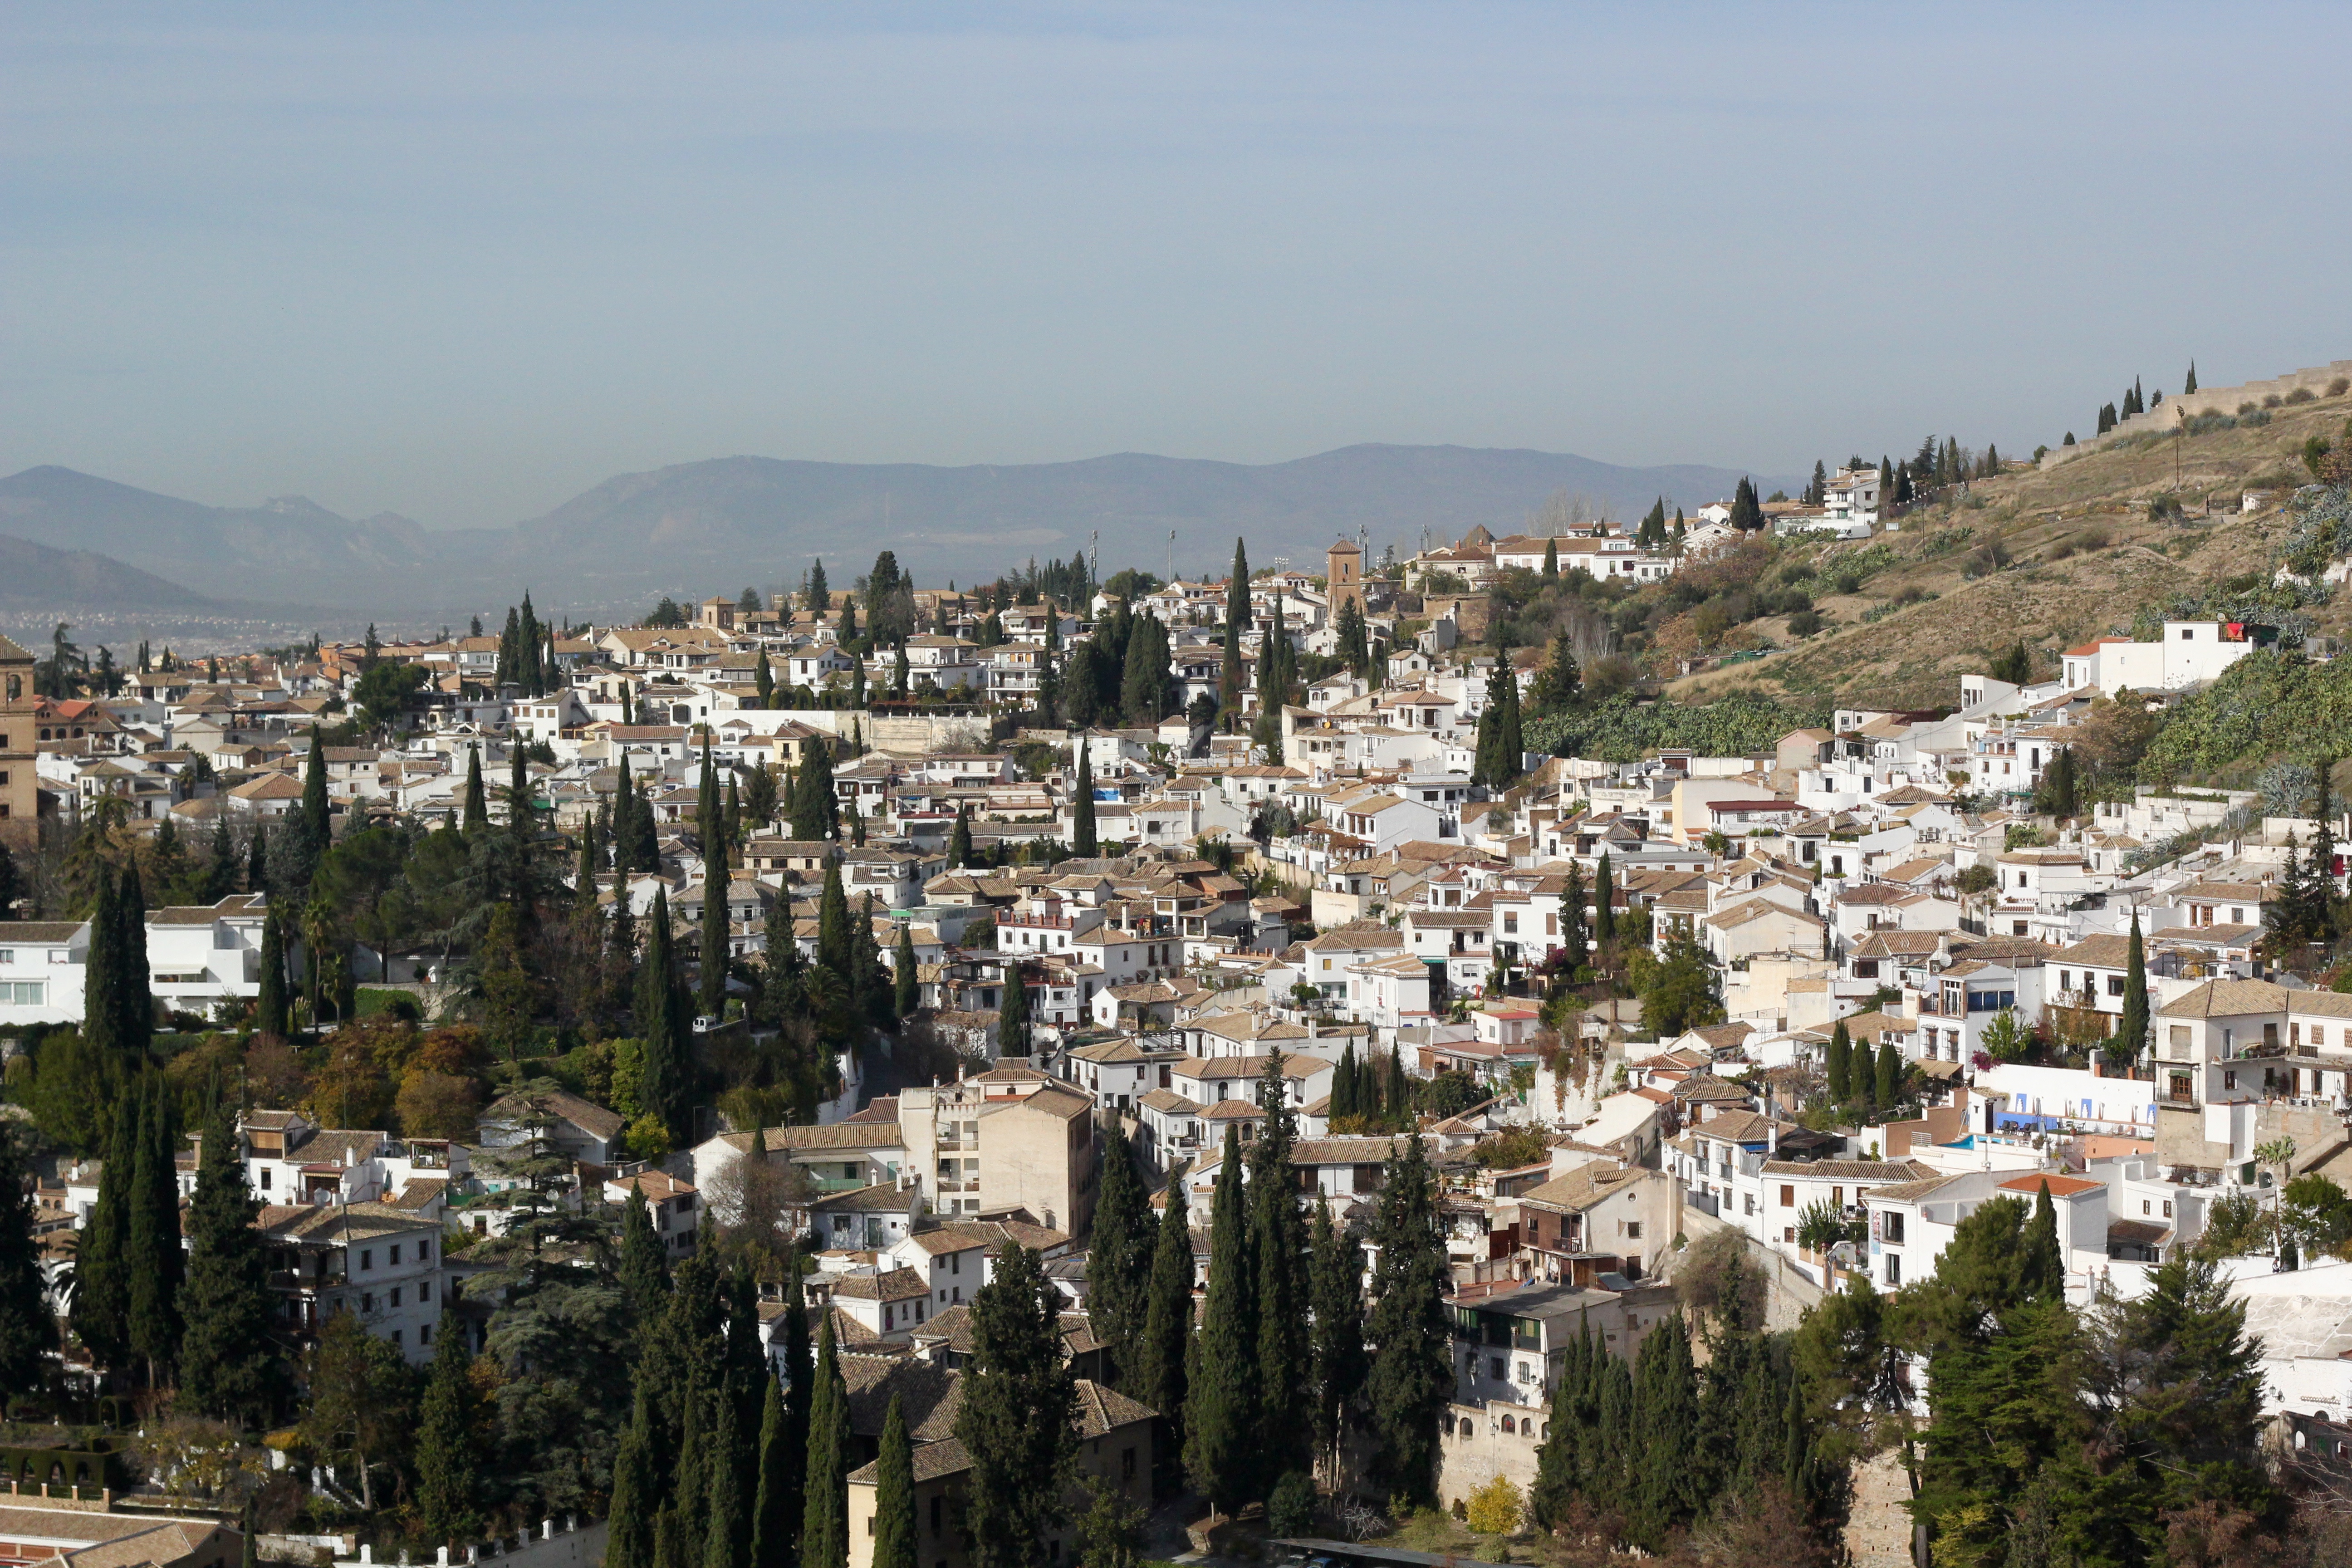 Visiting Alhambra, Granada, Spain - Kaptain Kenny Travel